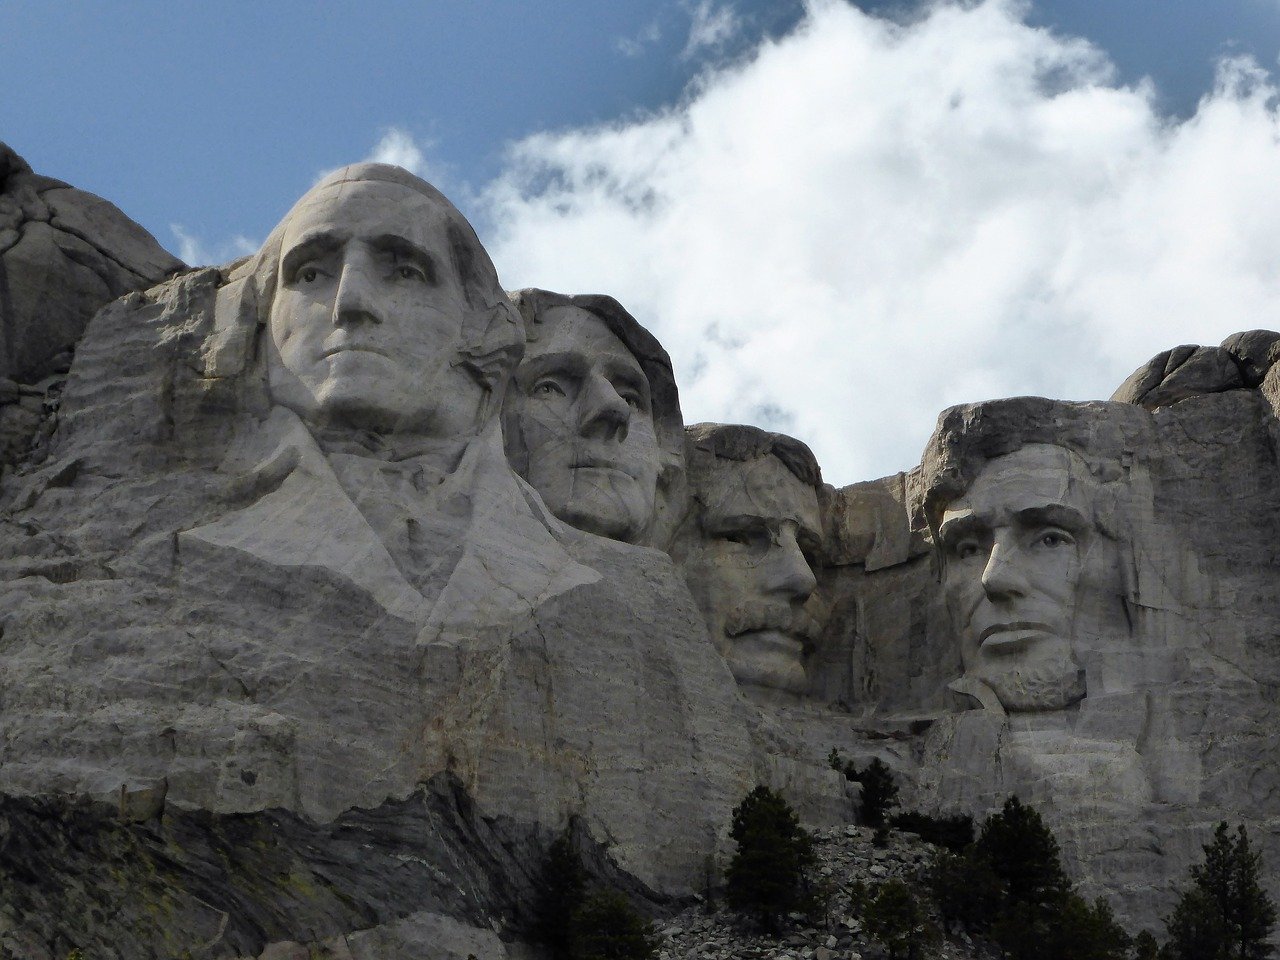 Mount Rushmore drawing visitors escaping US virus lockdowns